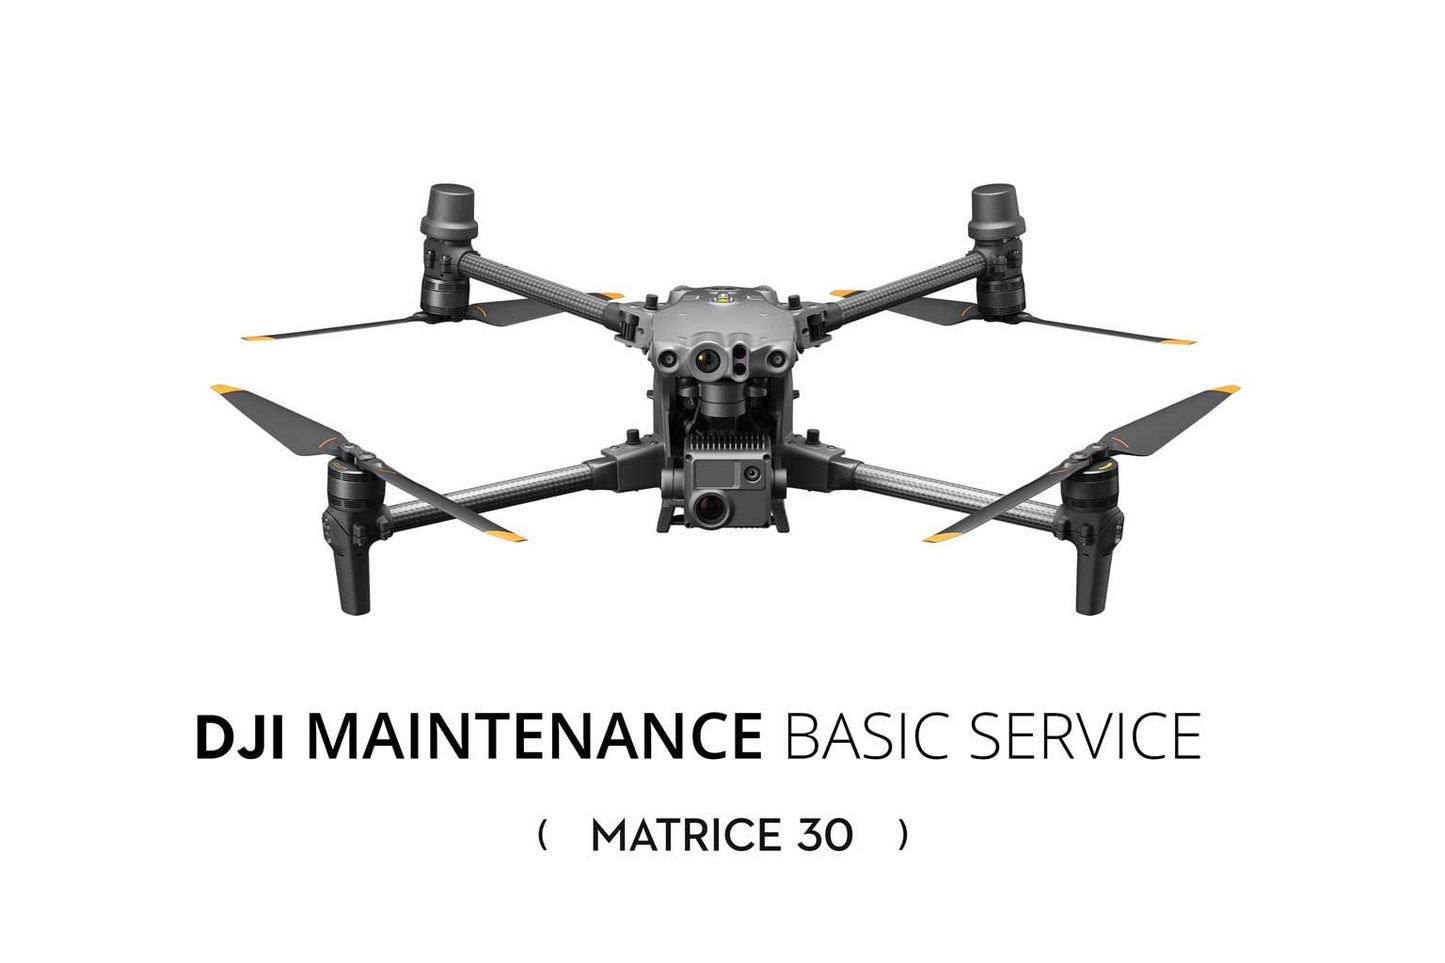 DJI M30 Maintenance service program